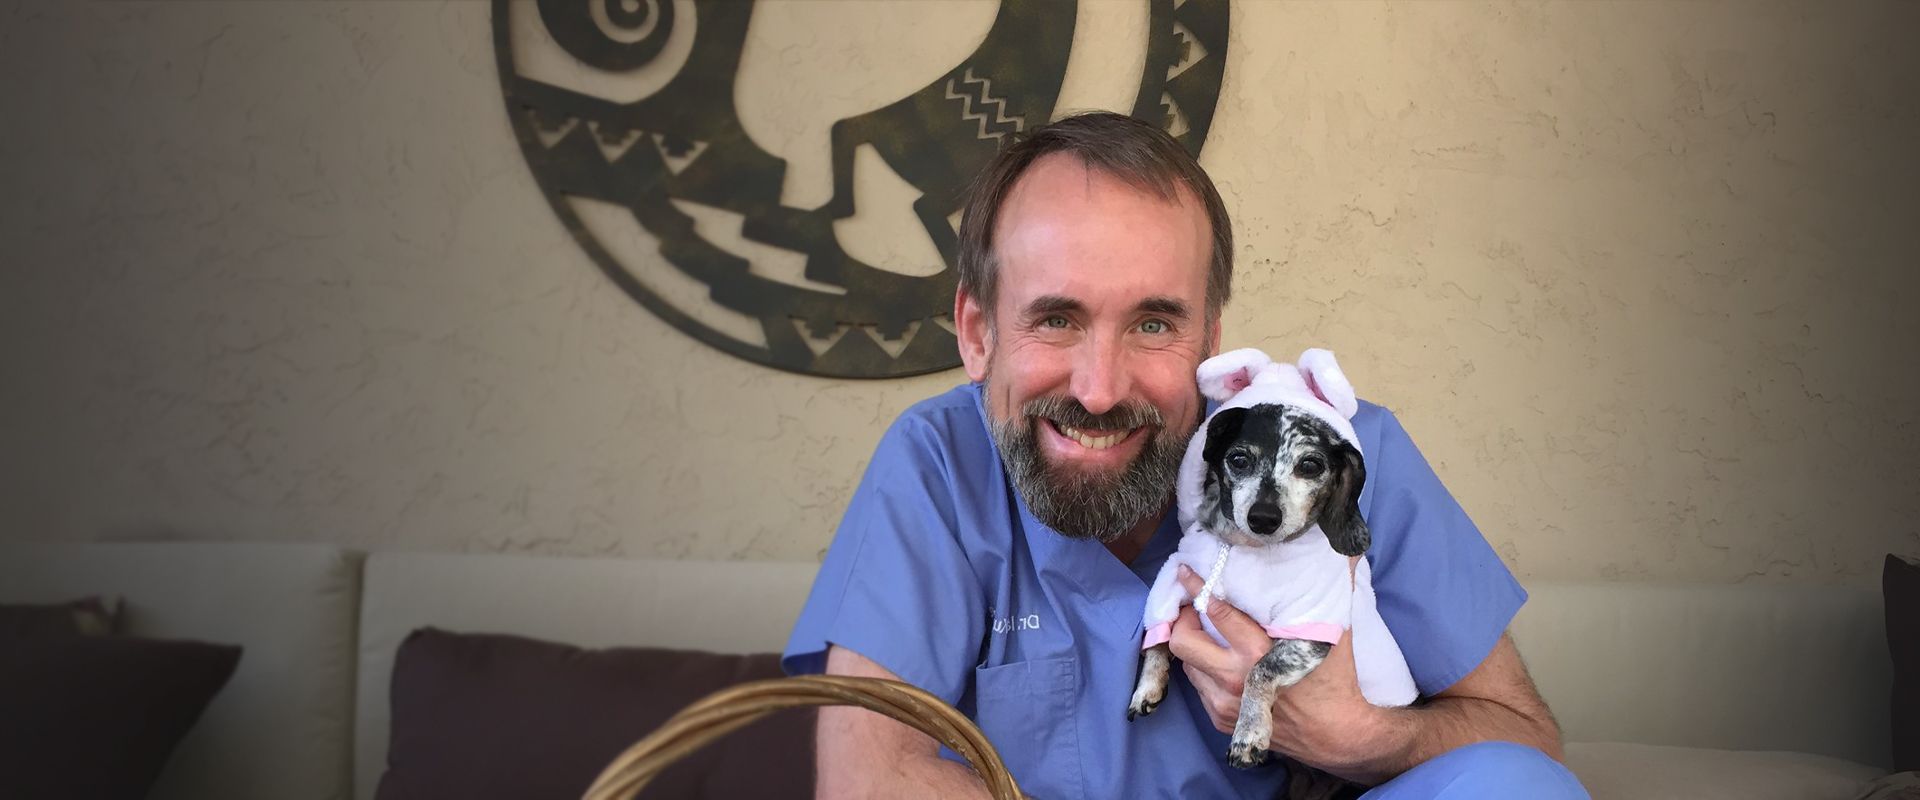 doctor ian kupkee with grendel his dachshund dog